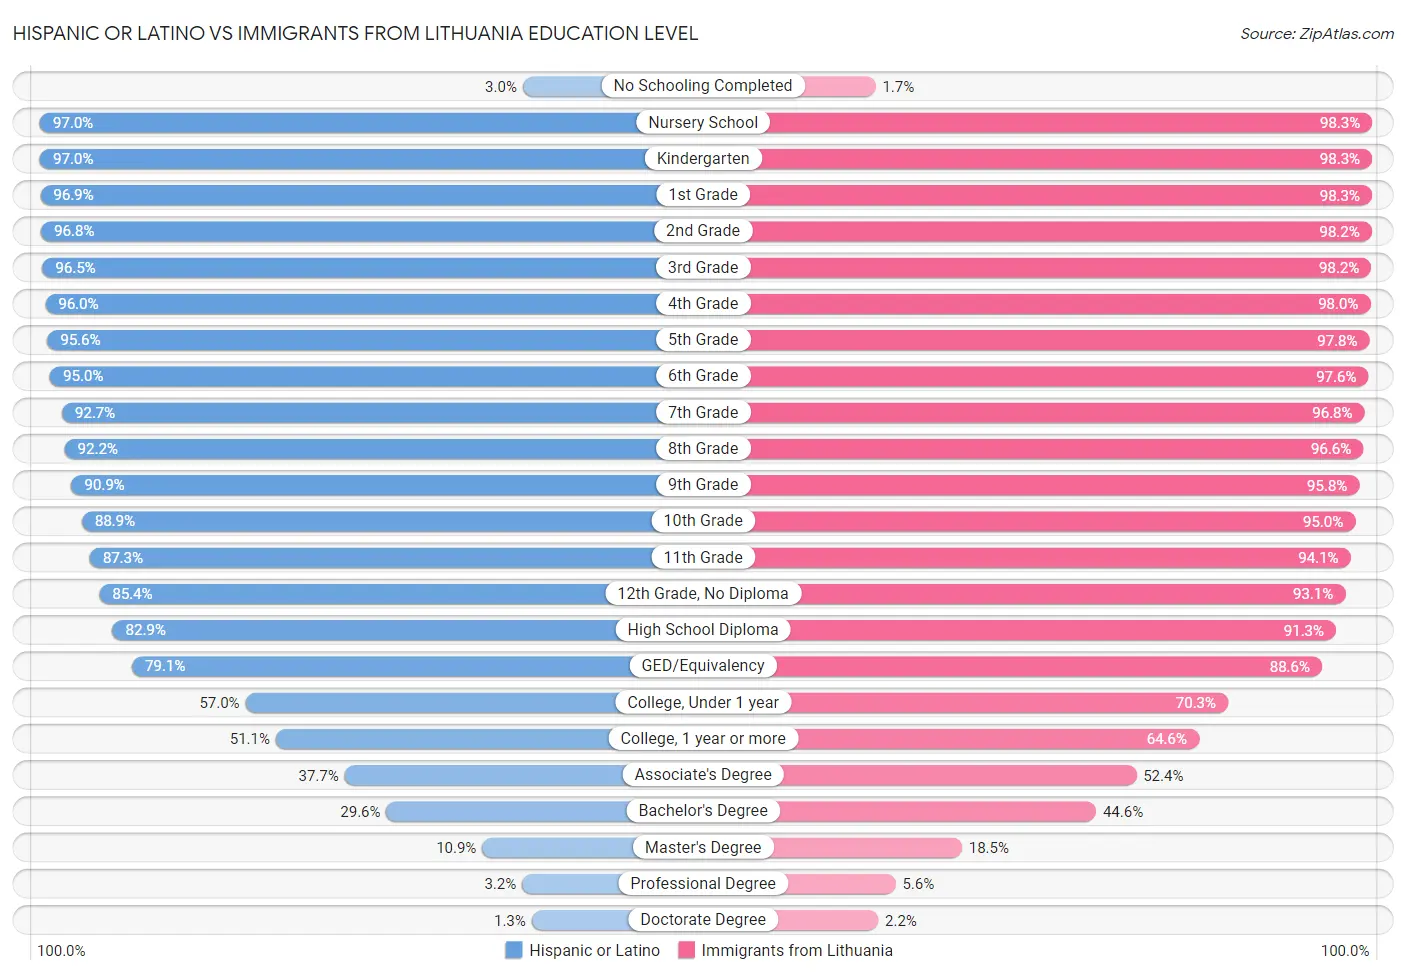 Hispanic or Latino vs Immigrants from Lithuania Education Level